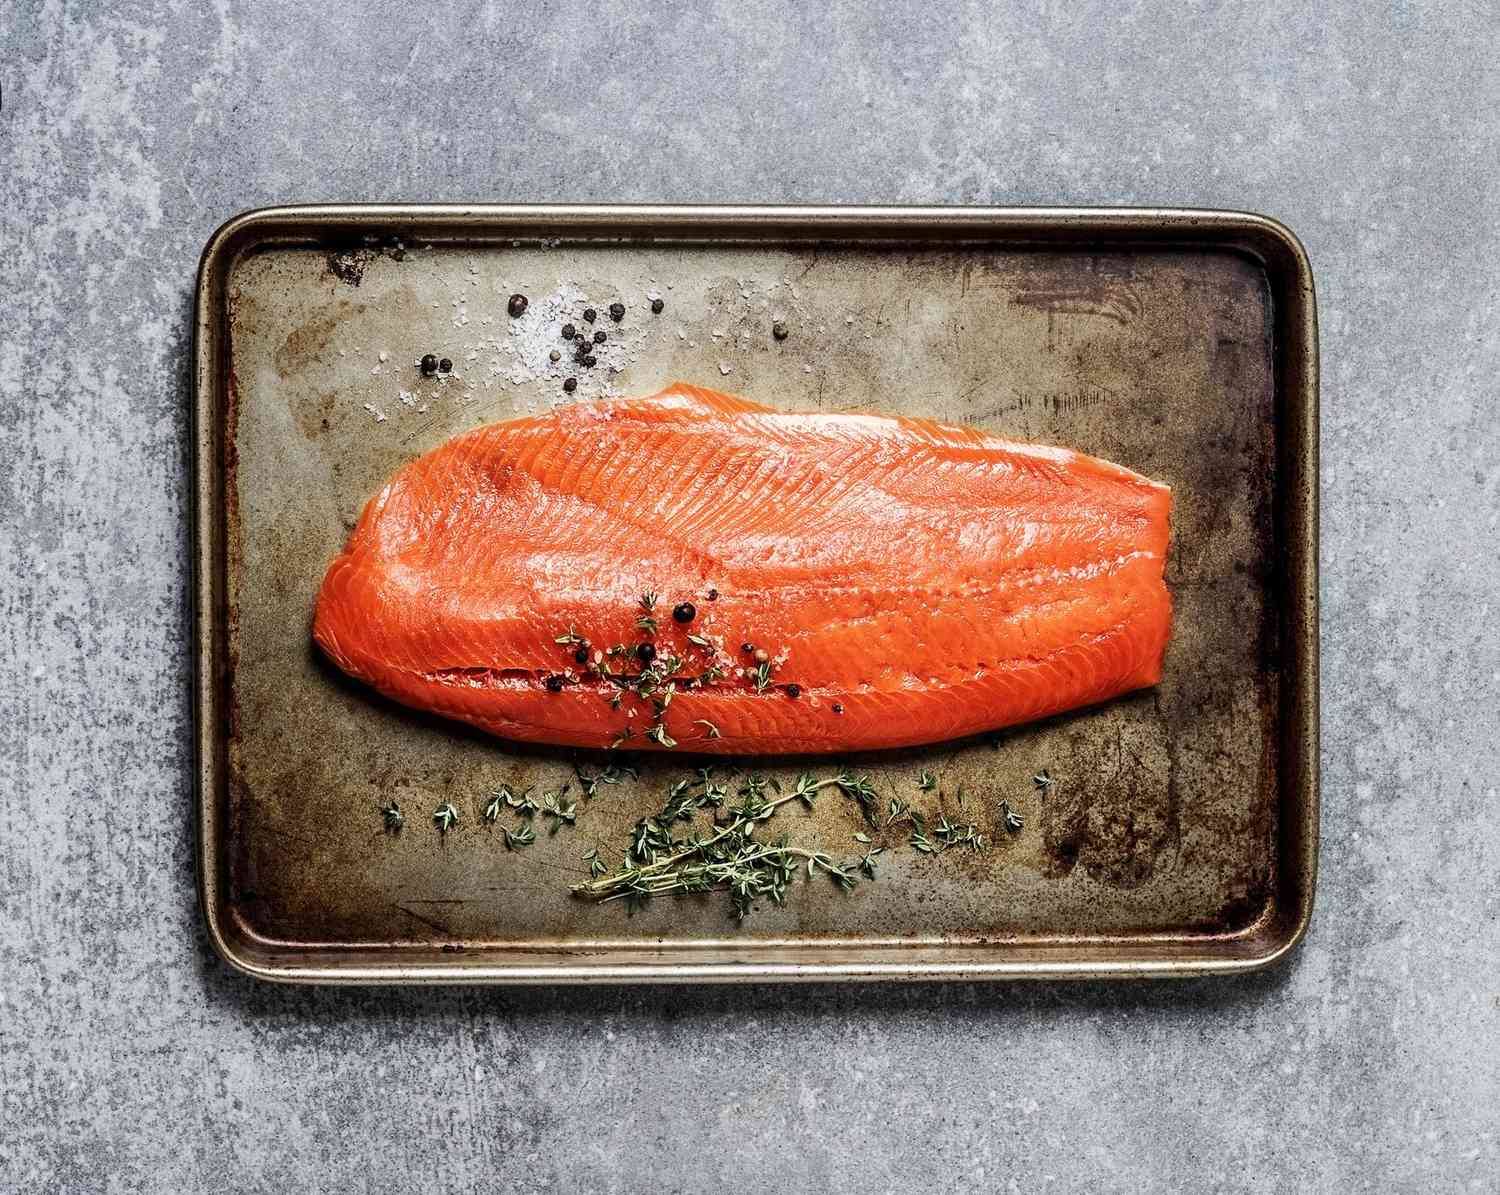 Raw salmon fillet on metal tray